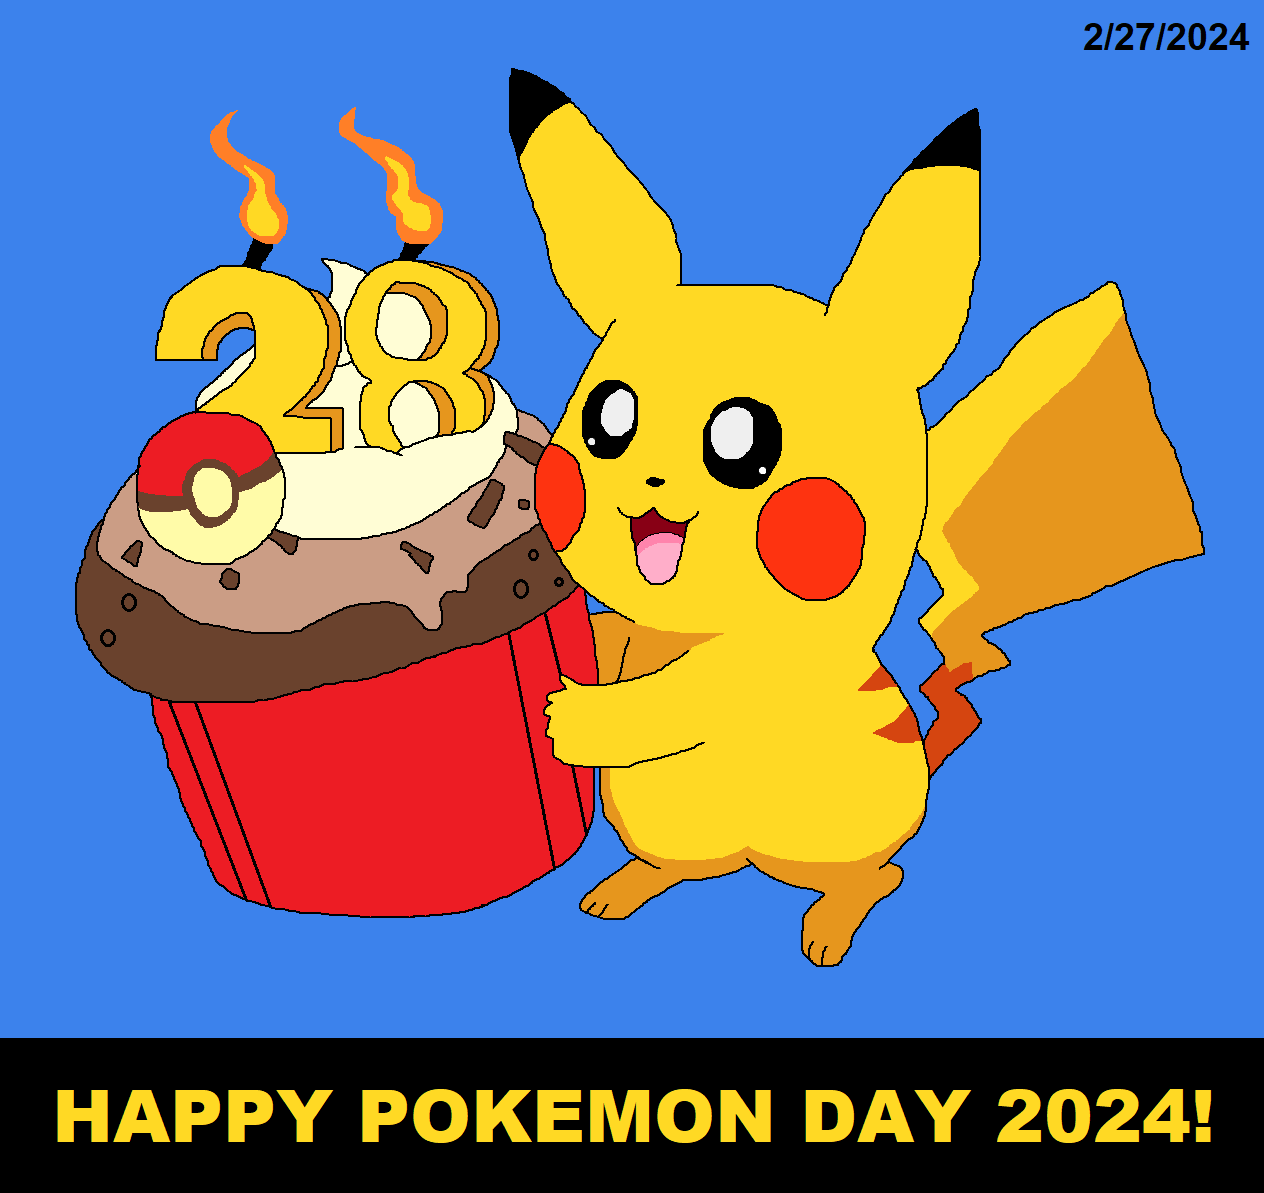 Happy Pokemon Day 2024! by KRBProductions on DeviantArt